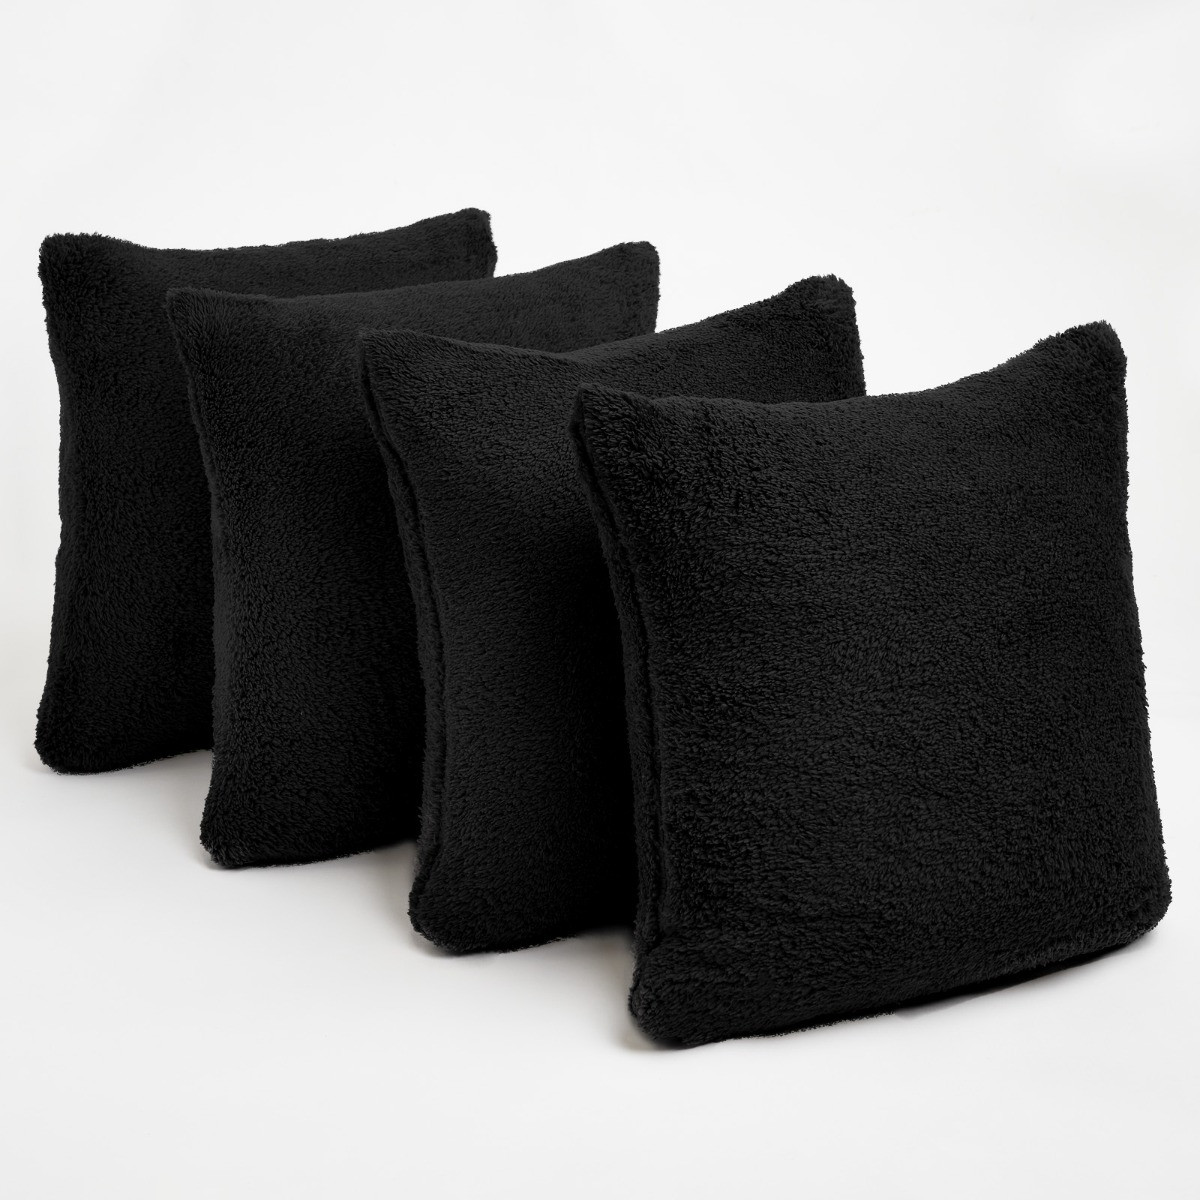 Brentfords Teddy Cushion Covers - Black